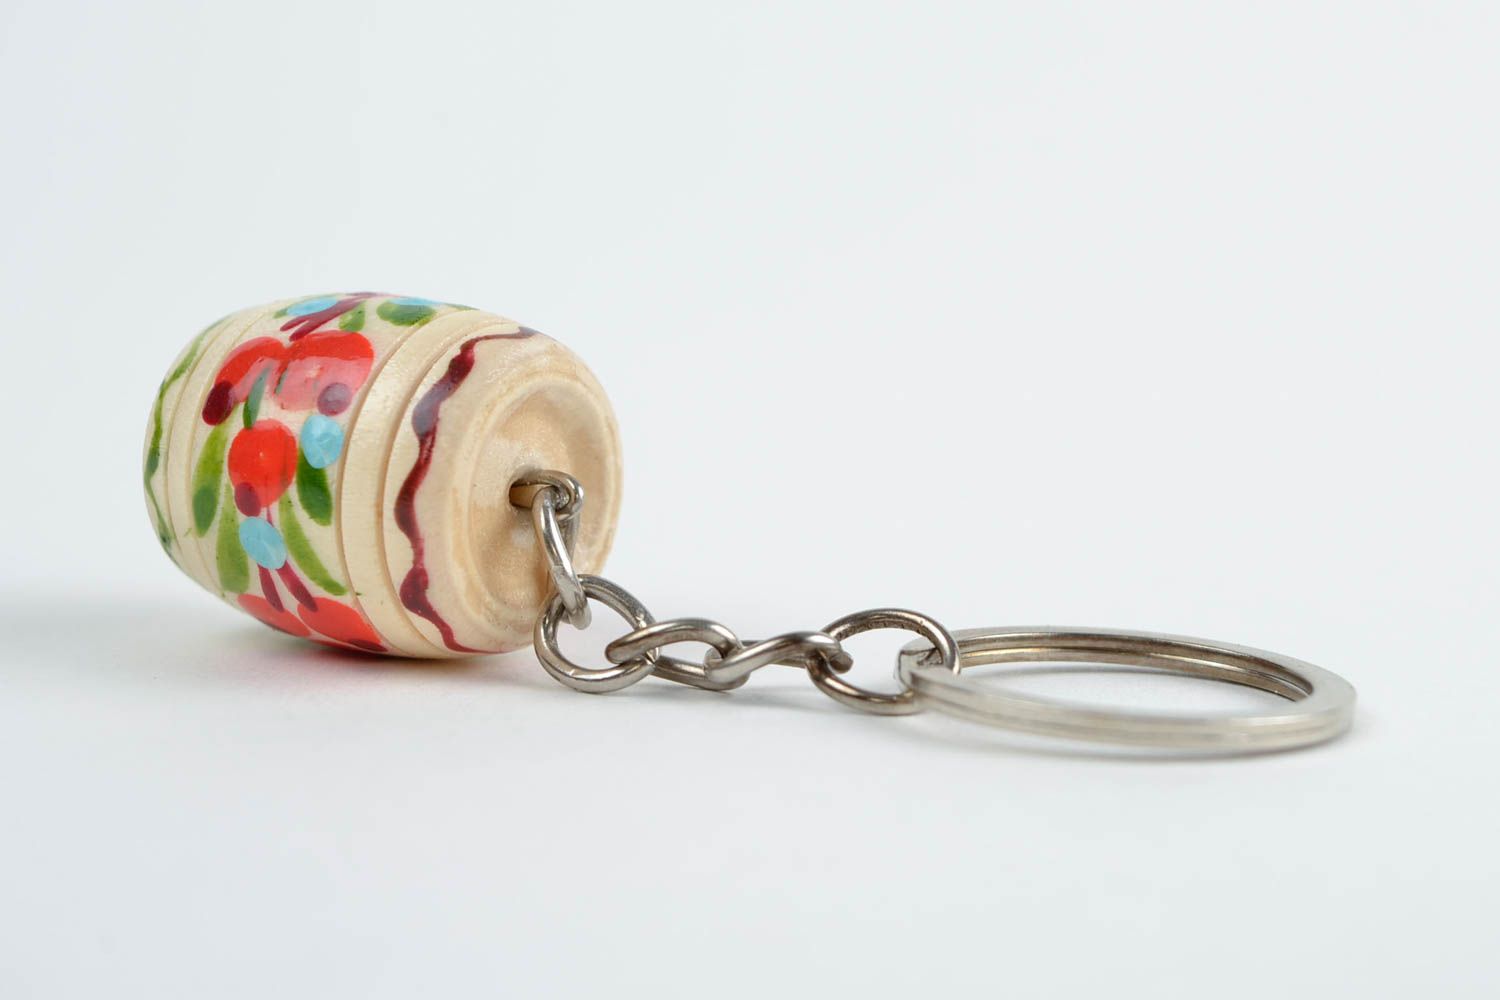 Unusual handmade wooden keychain popular keychain fashion accessories gift ideas photo 4